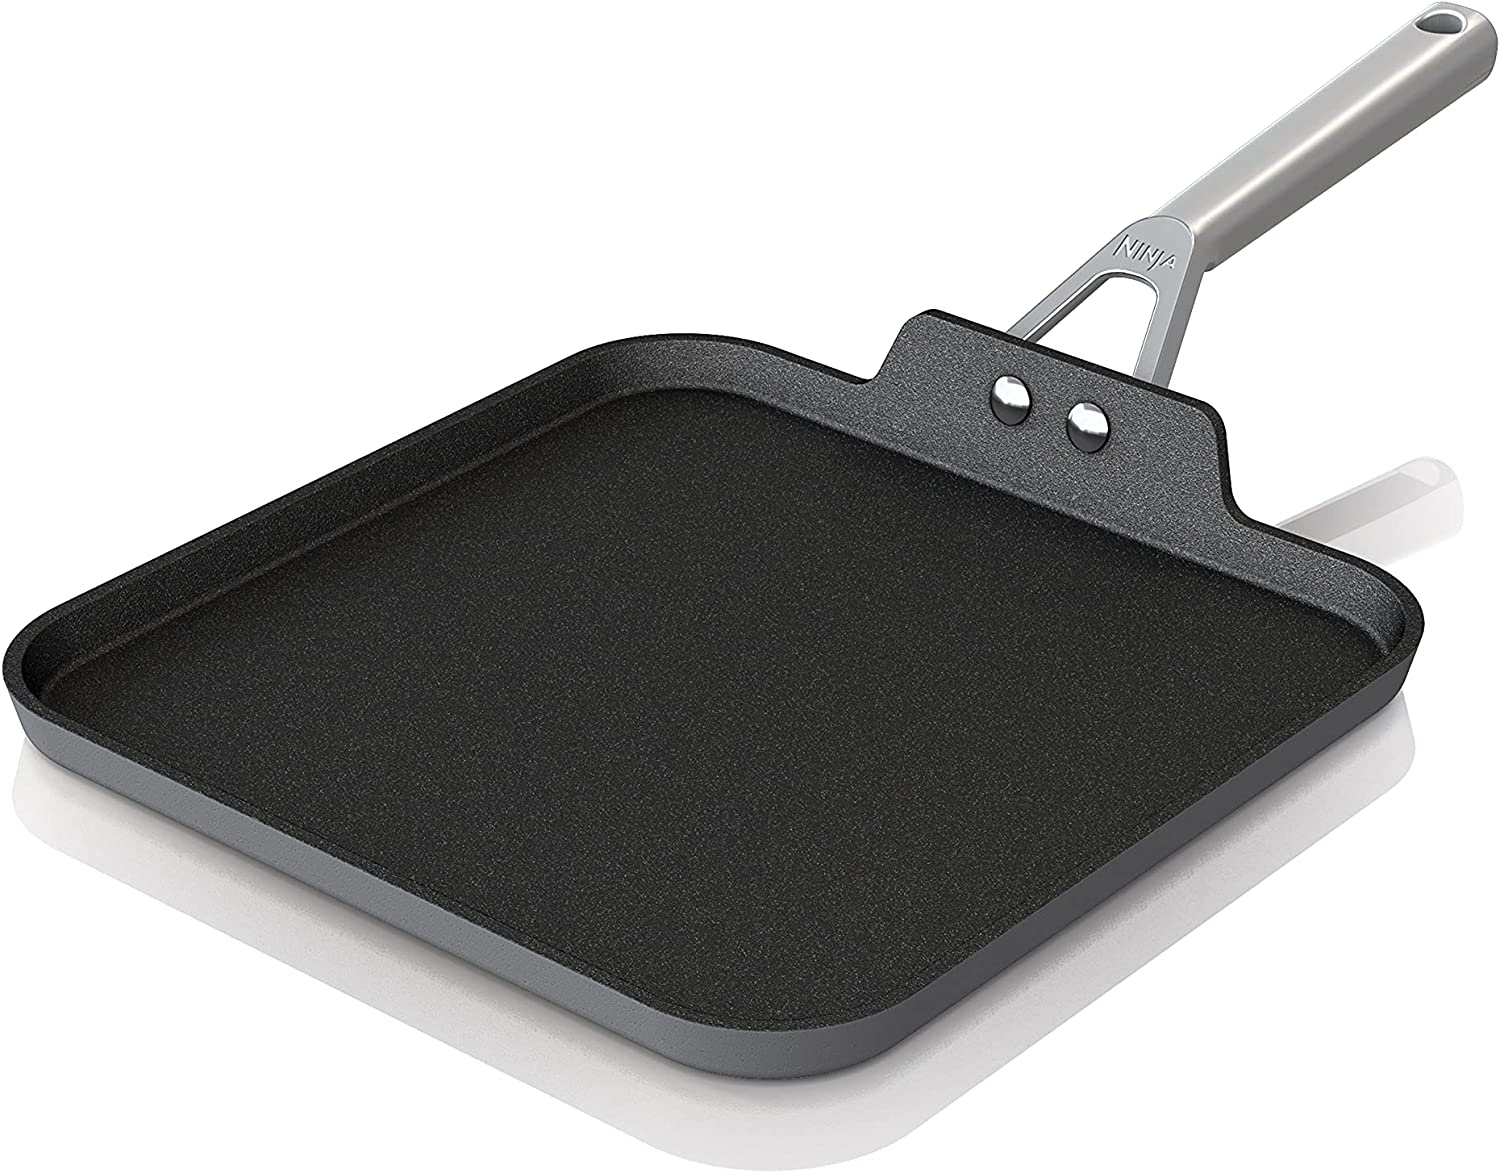 Ninja IG601 Foodi XL Pro 7-in-1 Grill & Griddle Pans - Black for